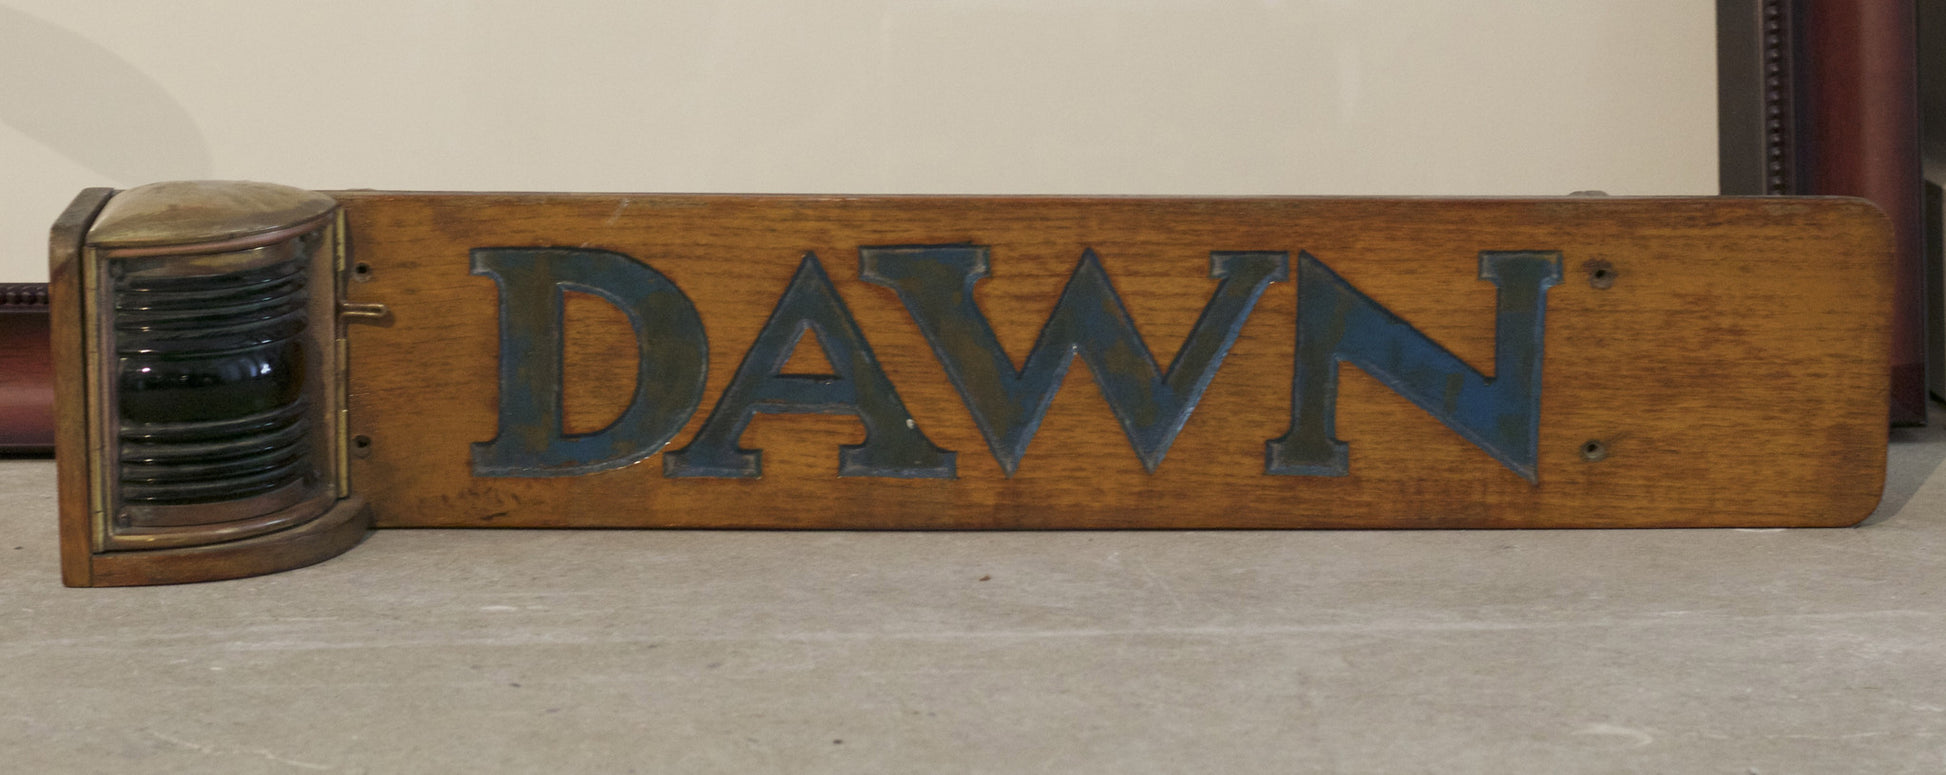 Nameboard from Yacht Dawn - Lannan Gallery